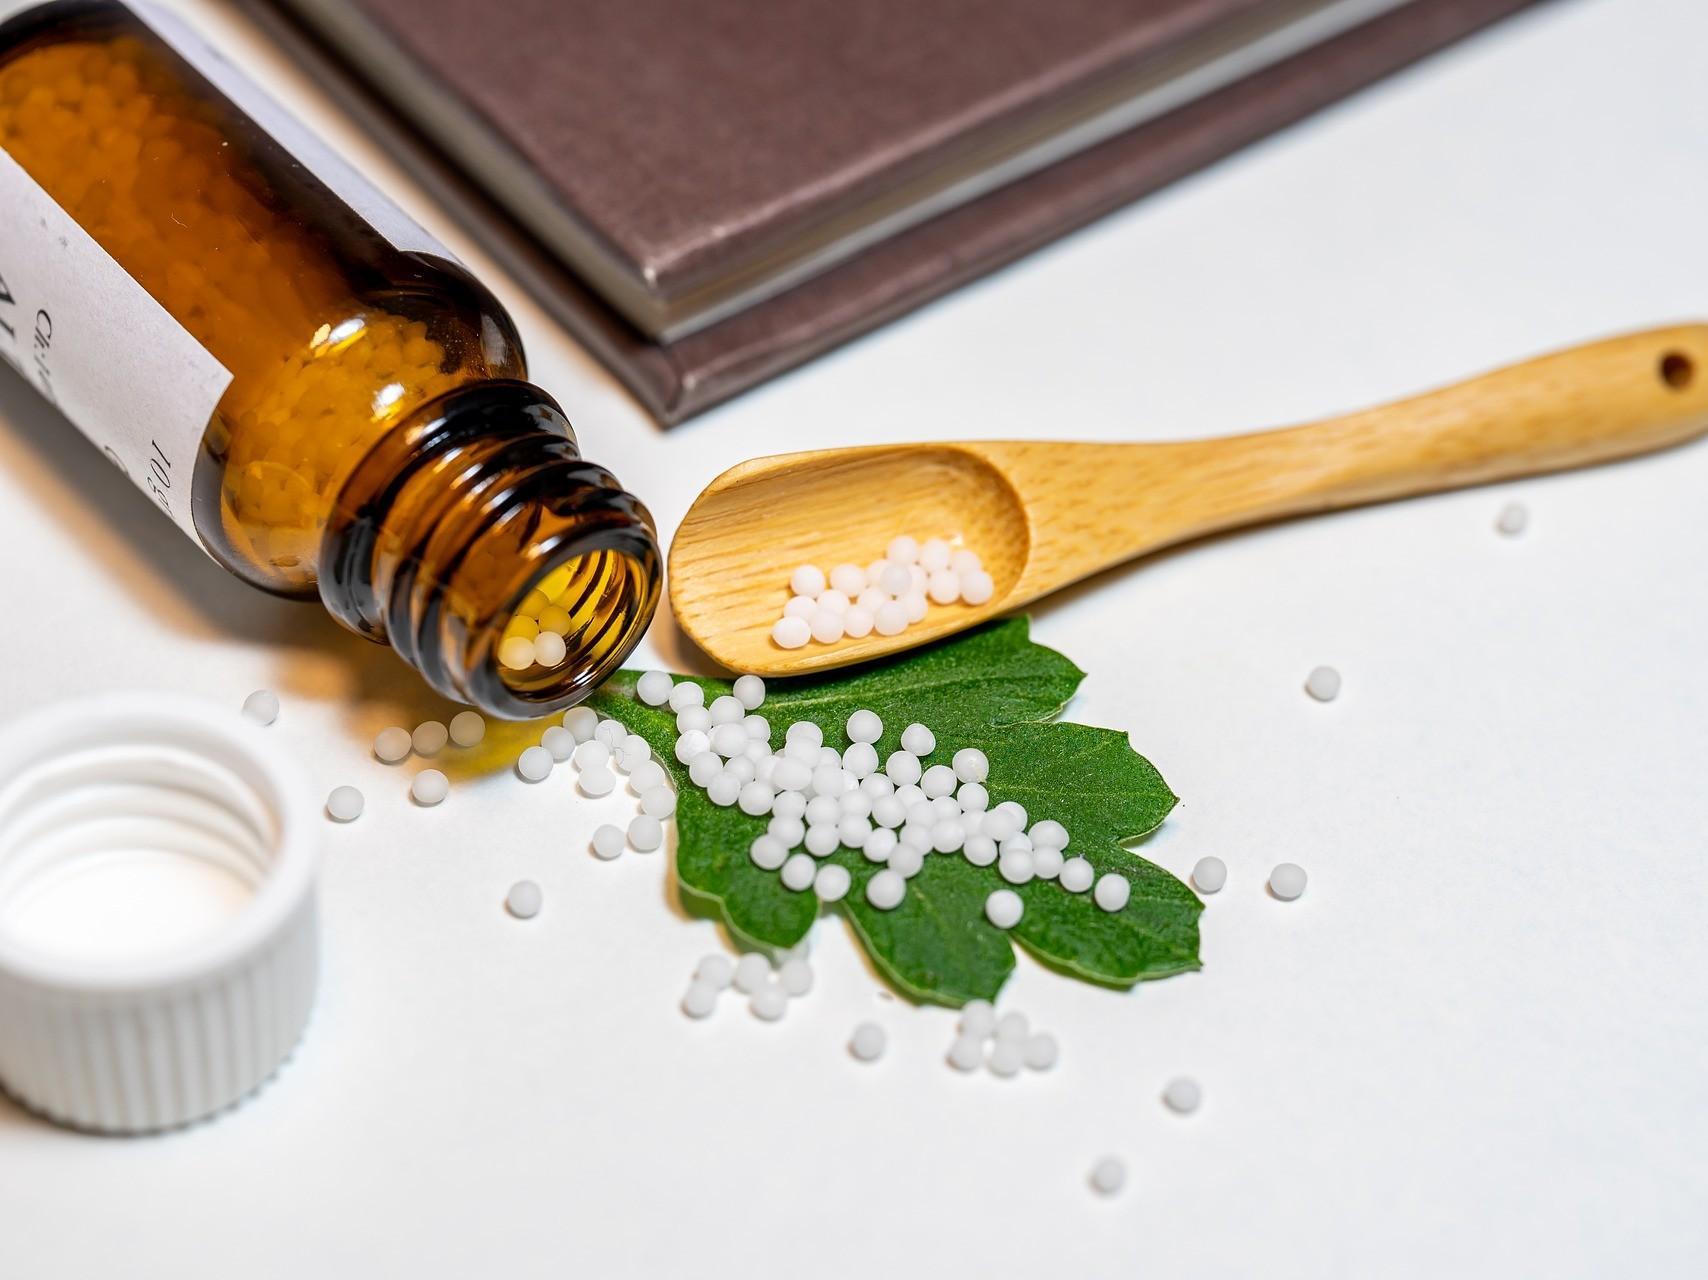 siitepölyallergia homeopatia